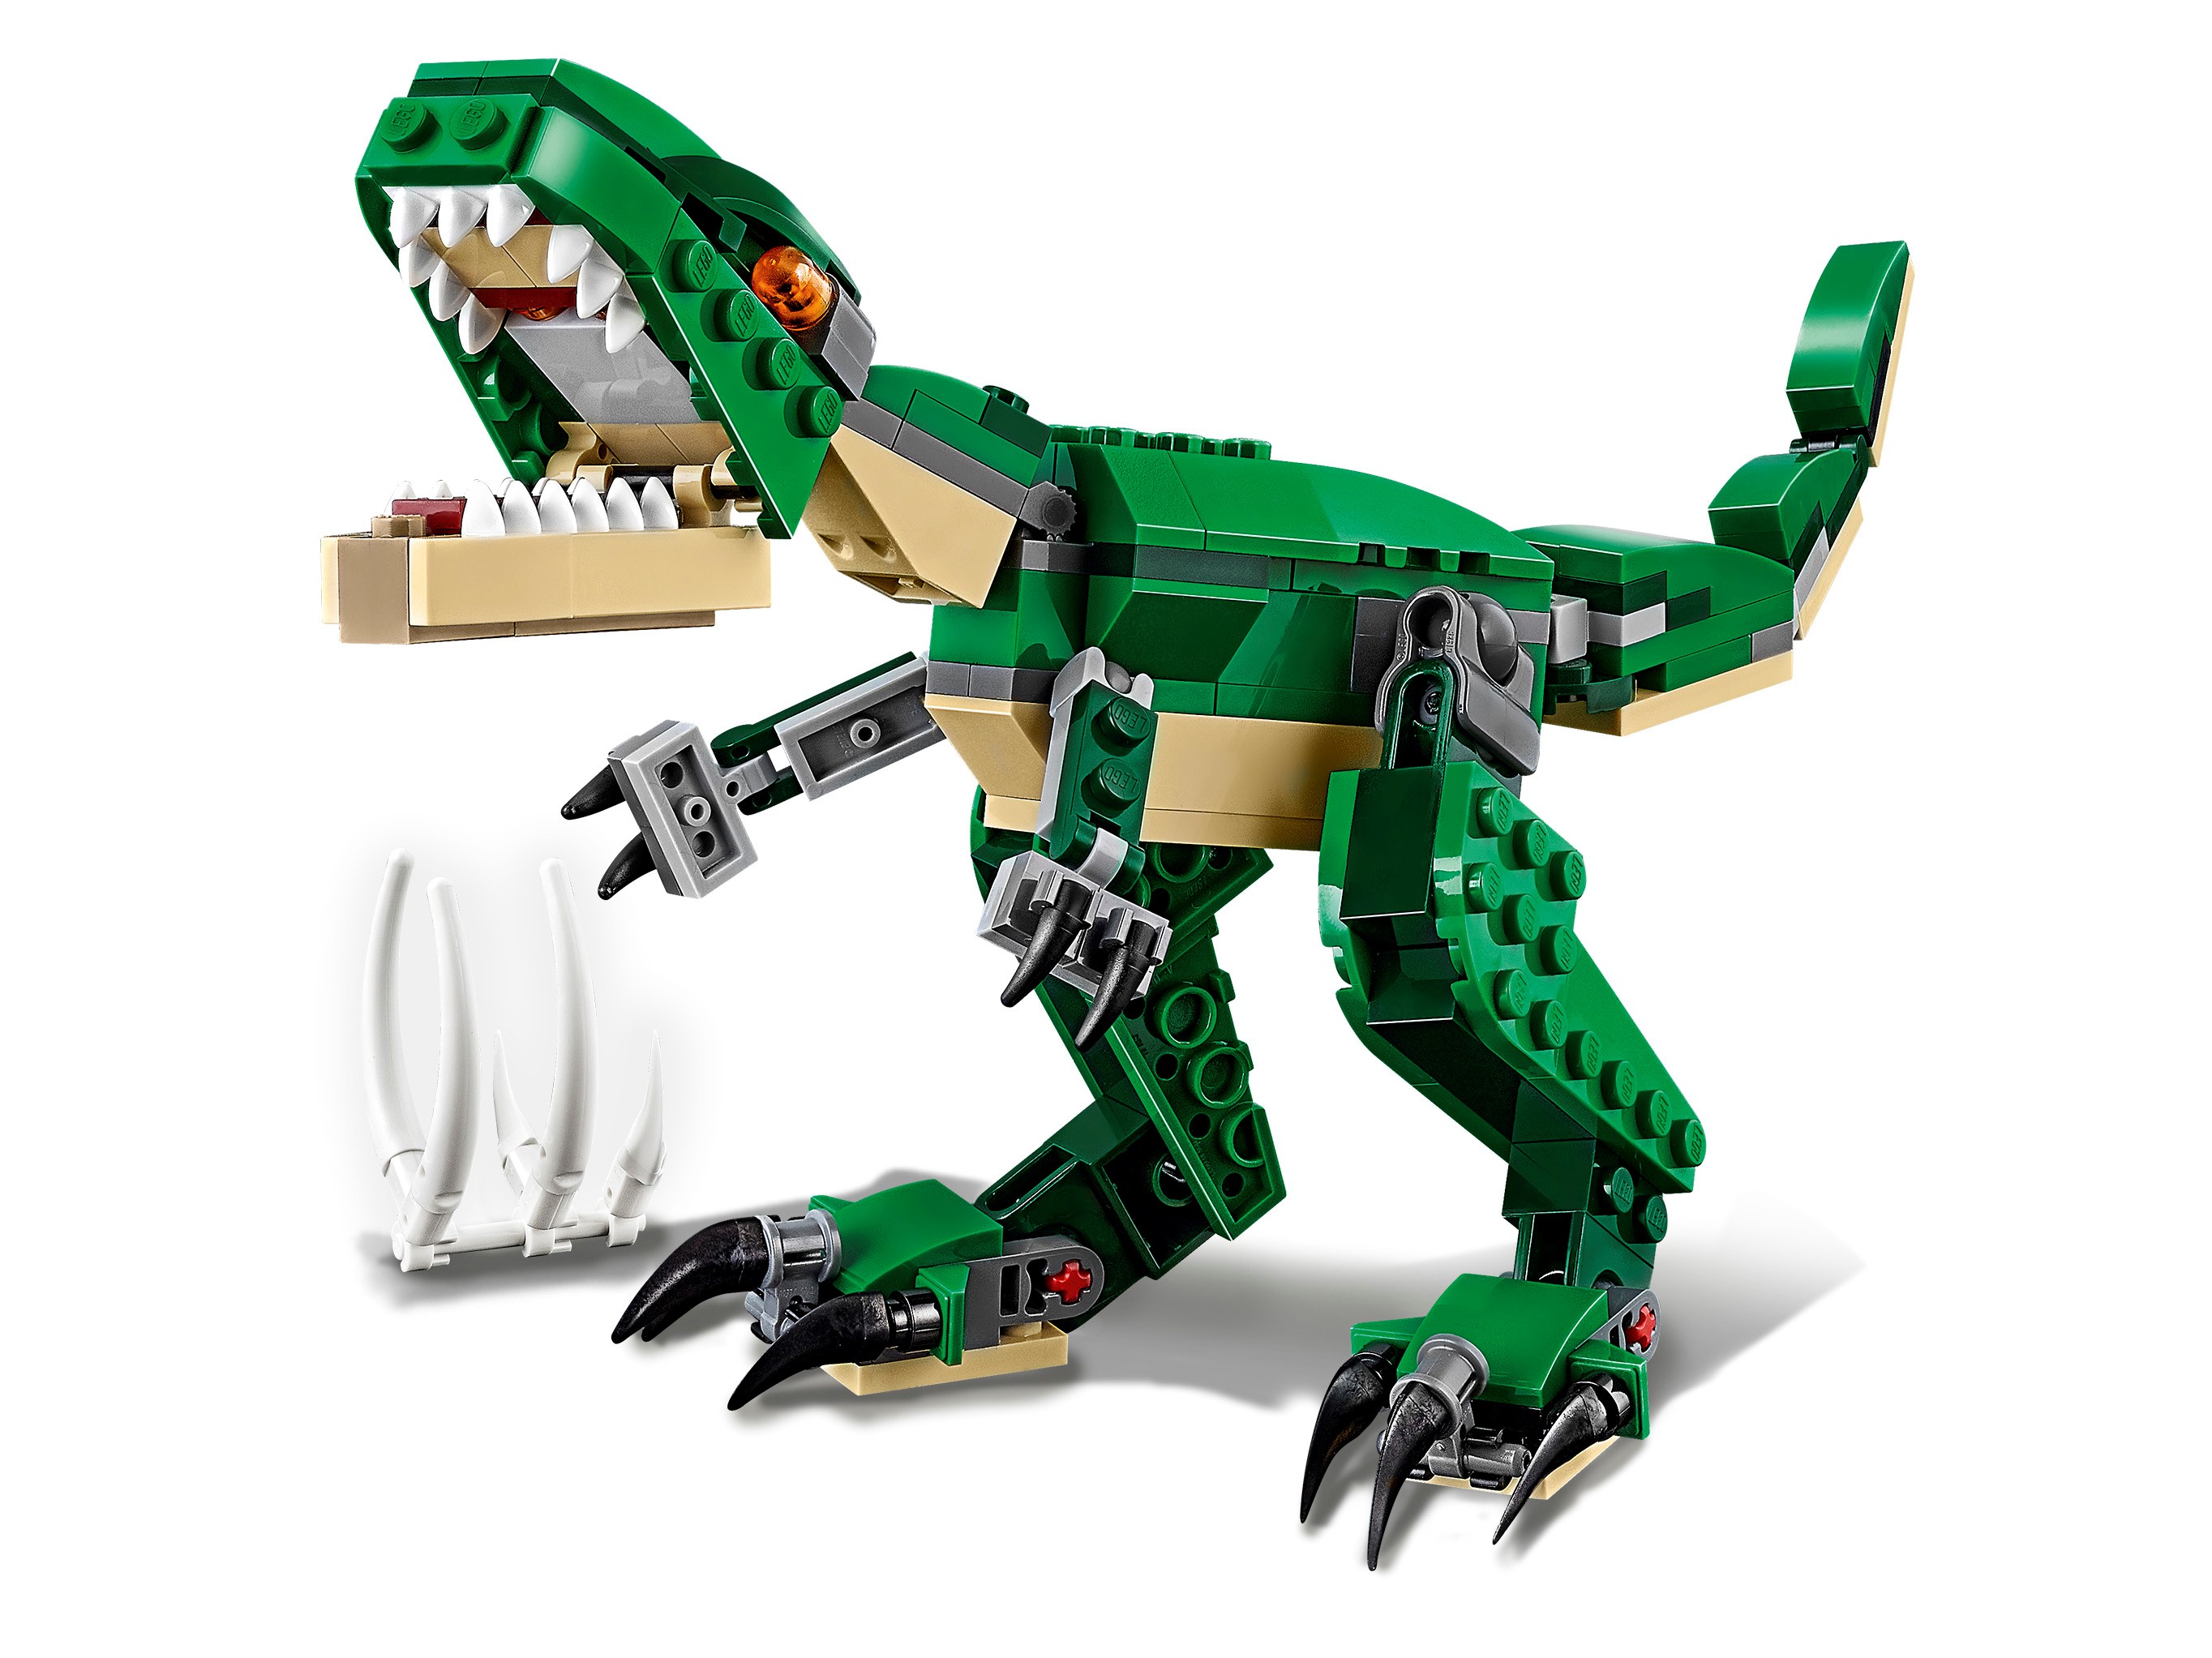 LEGO Dino